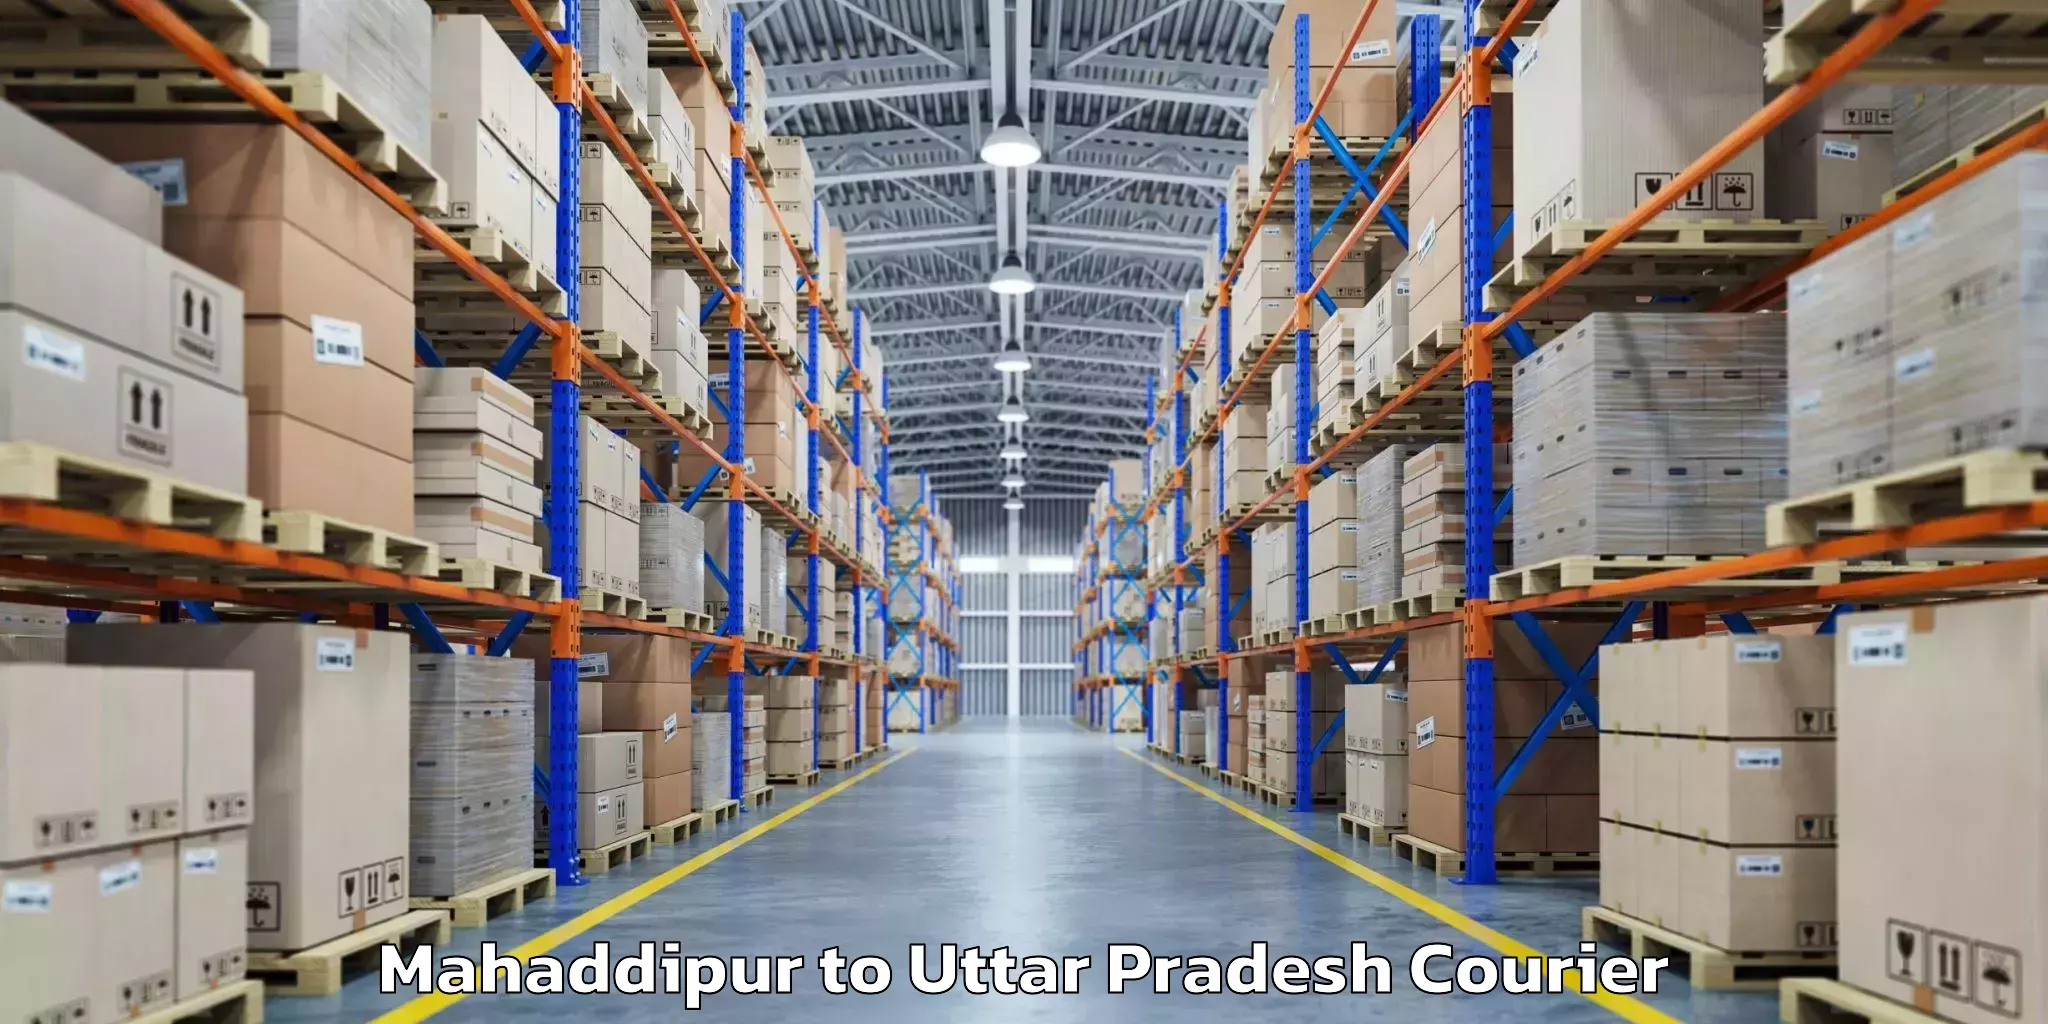 Luggage shipping planner Mahaddipur to Pilibhit